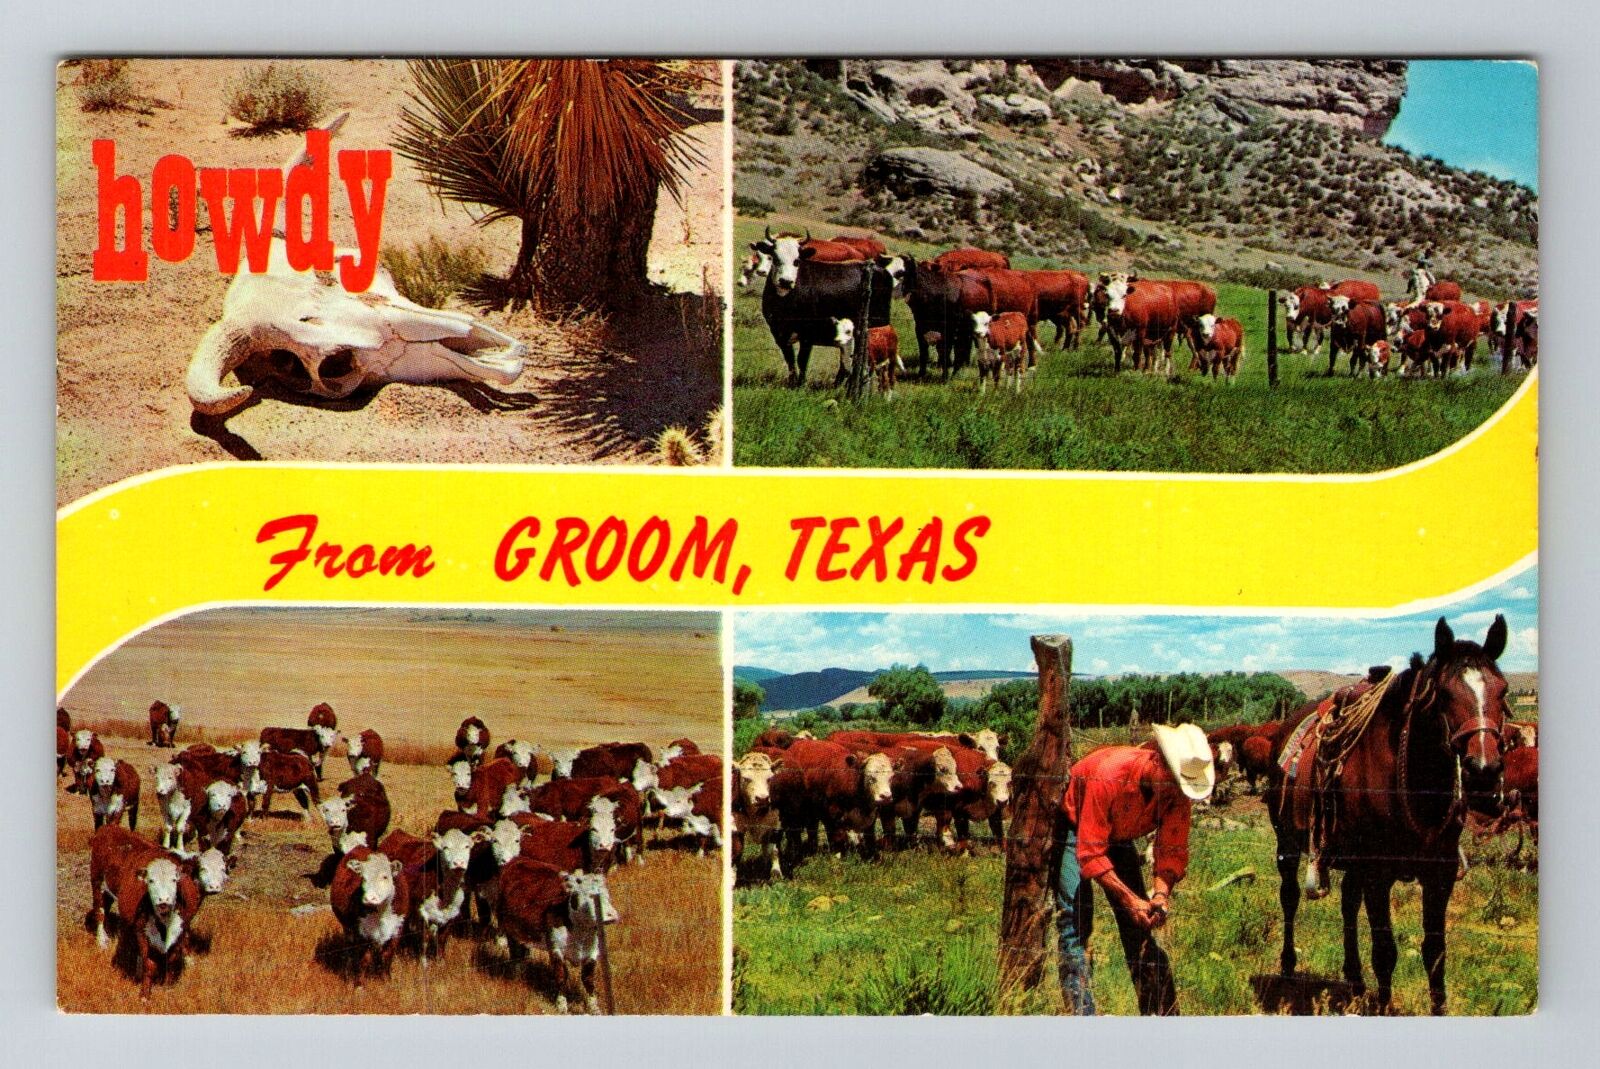 Groom TX-Texas, Scenic Banner Greetings, Cattle, Vintage Postcard